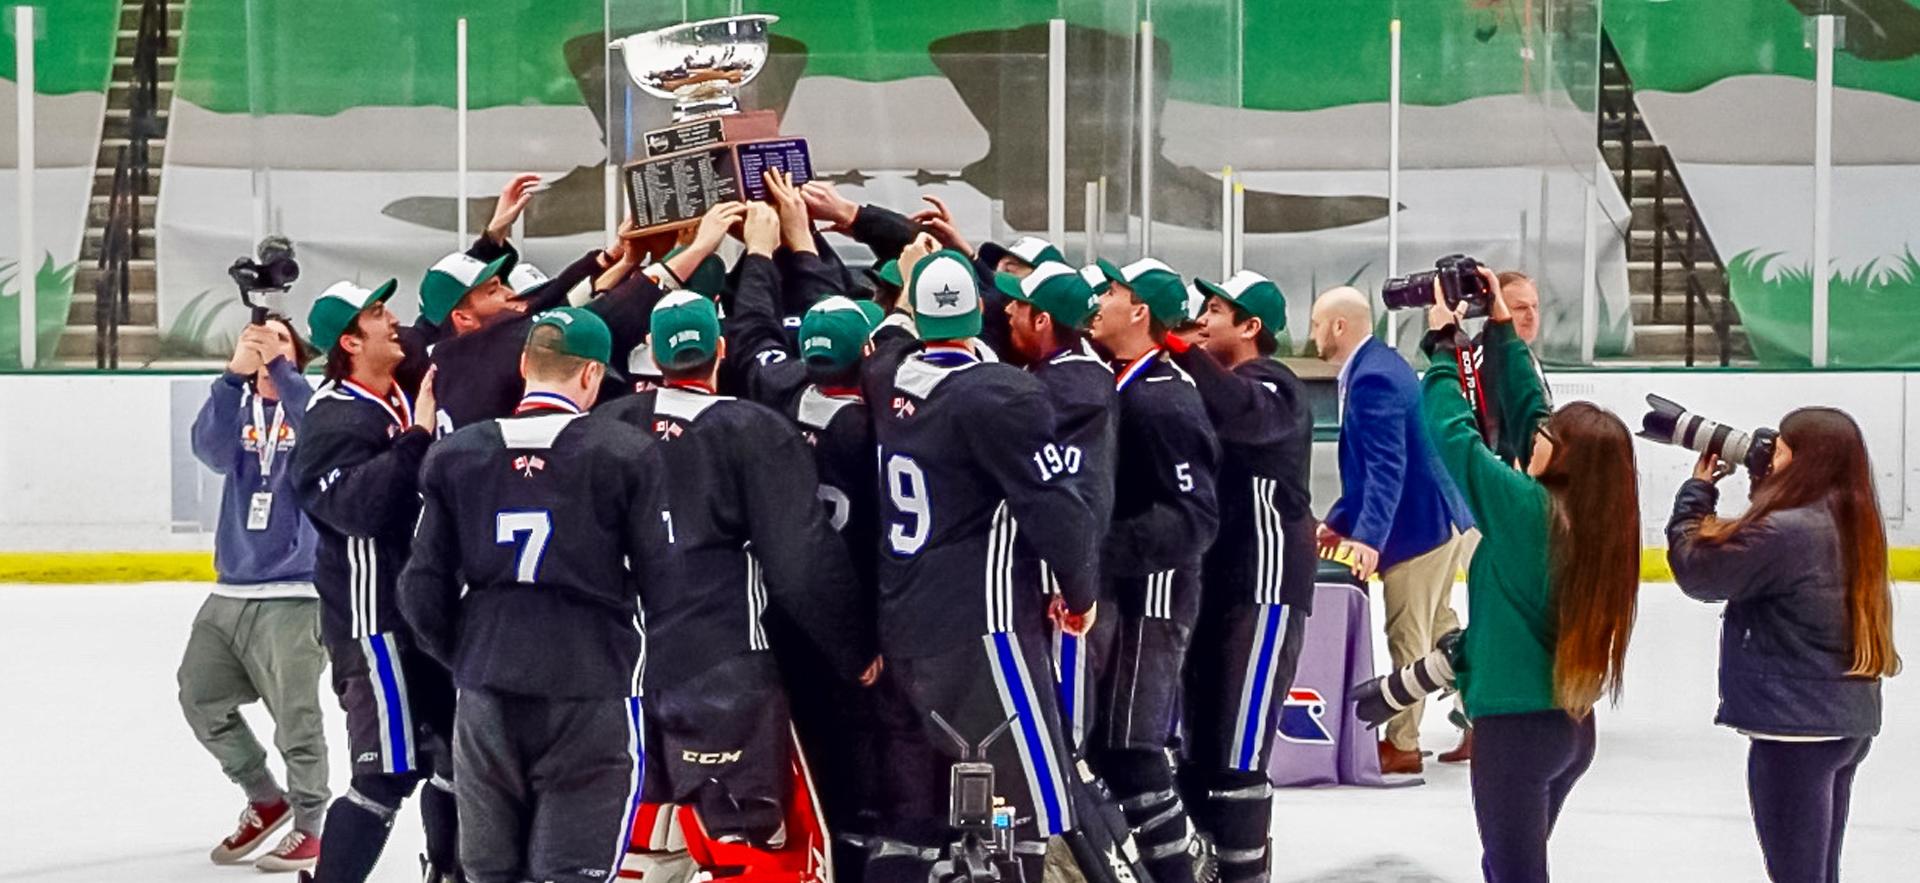 Men's ACHA Hockey Champions 2019 holding up trophy on ice